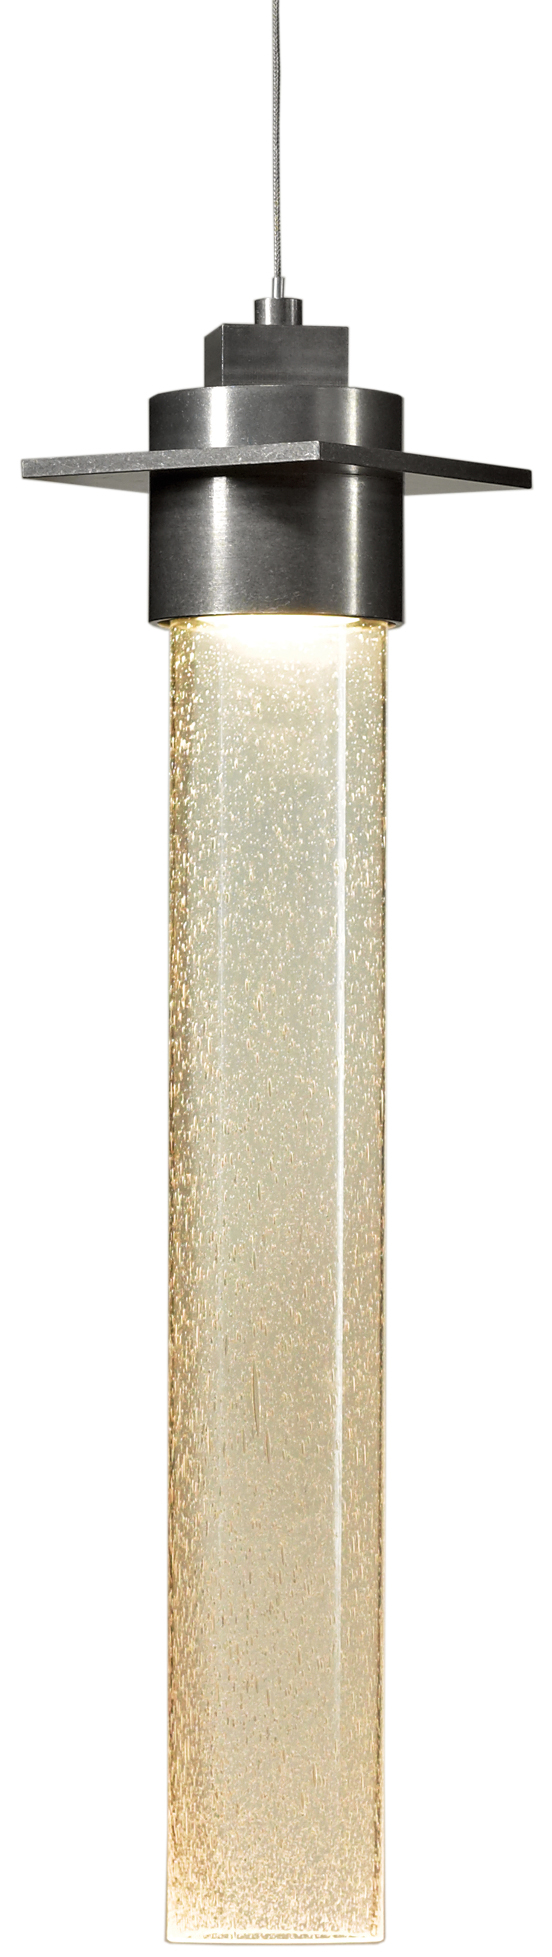 Airis LV Mini Pendant by Hubbardton Forge, 161025-1000